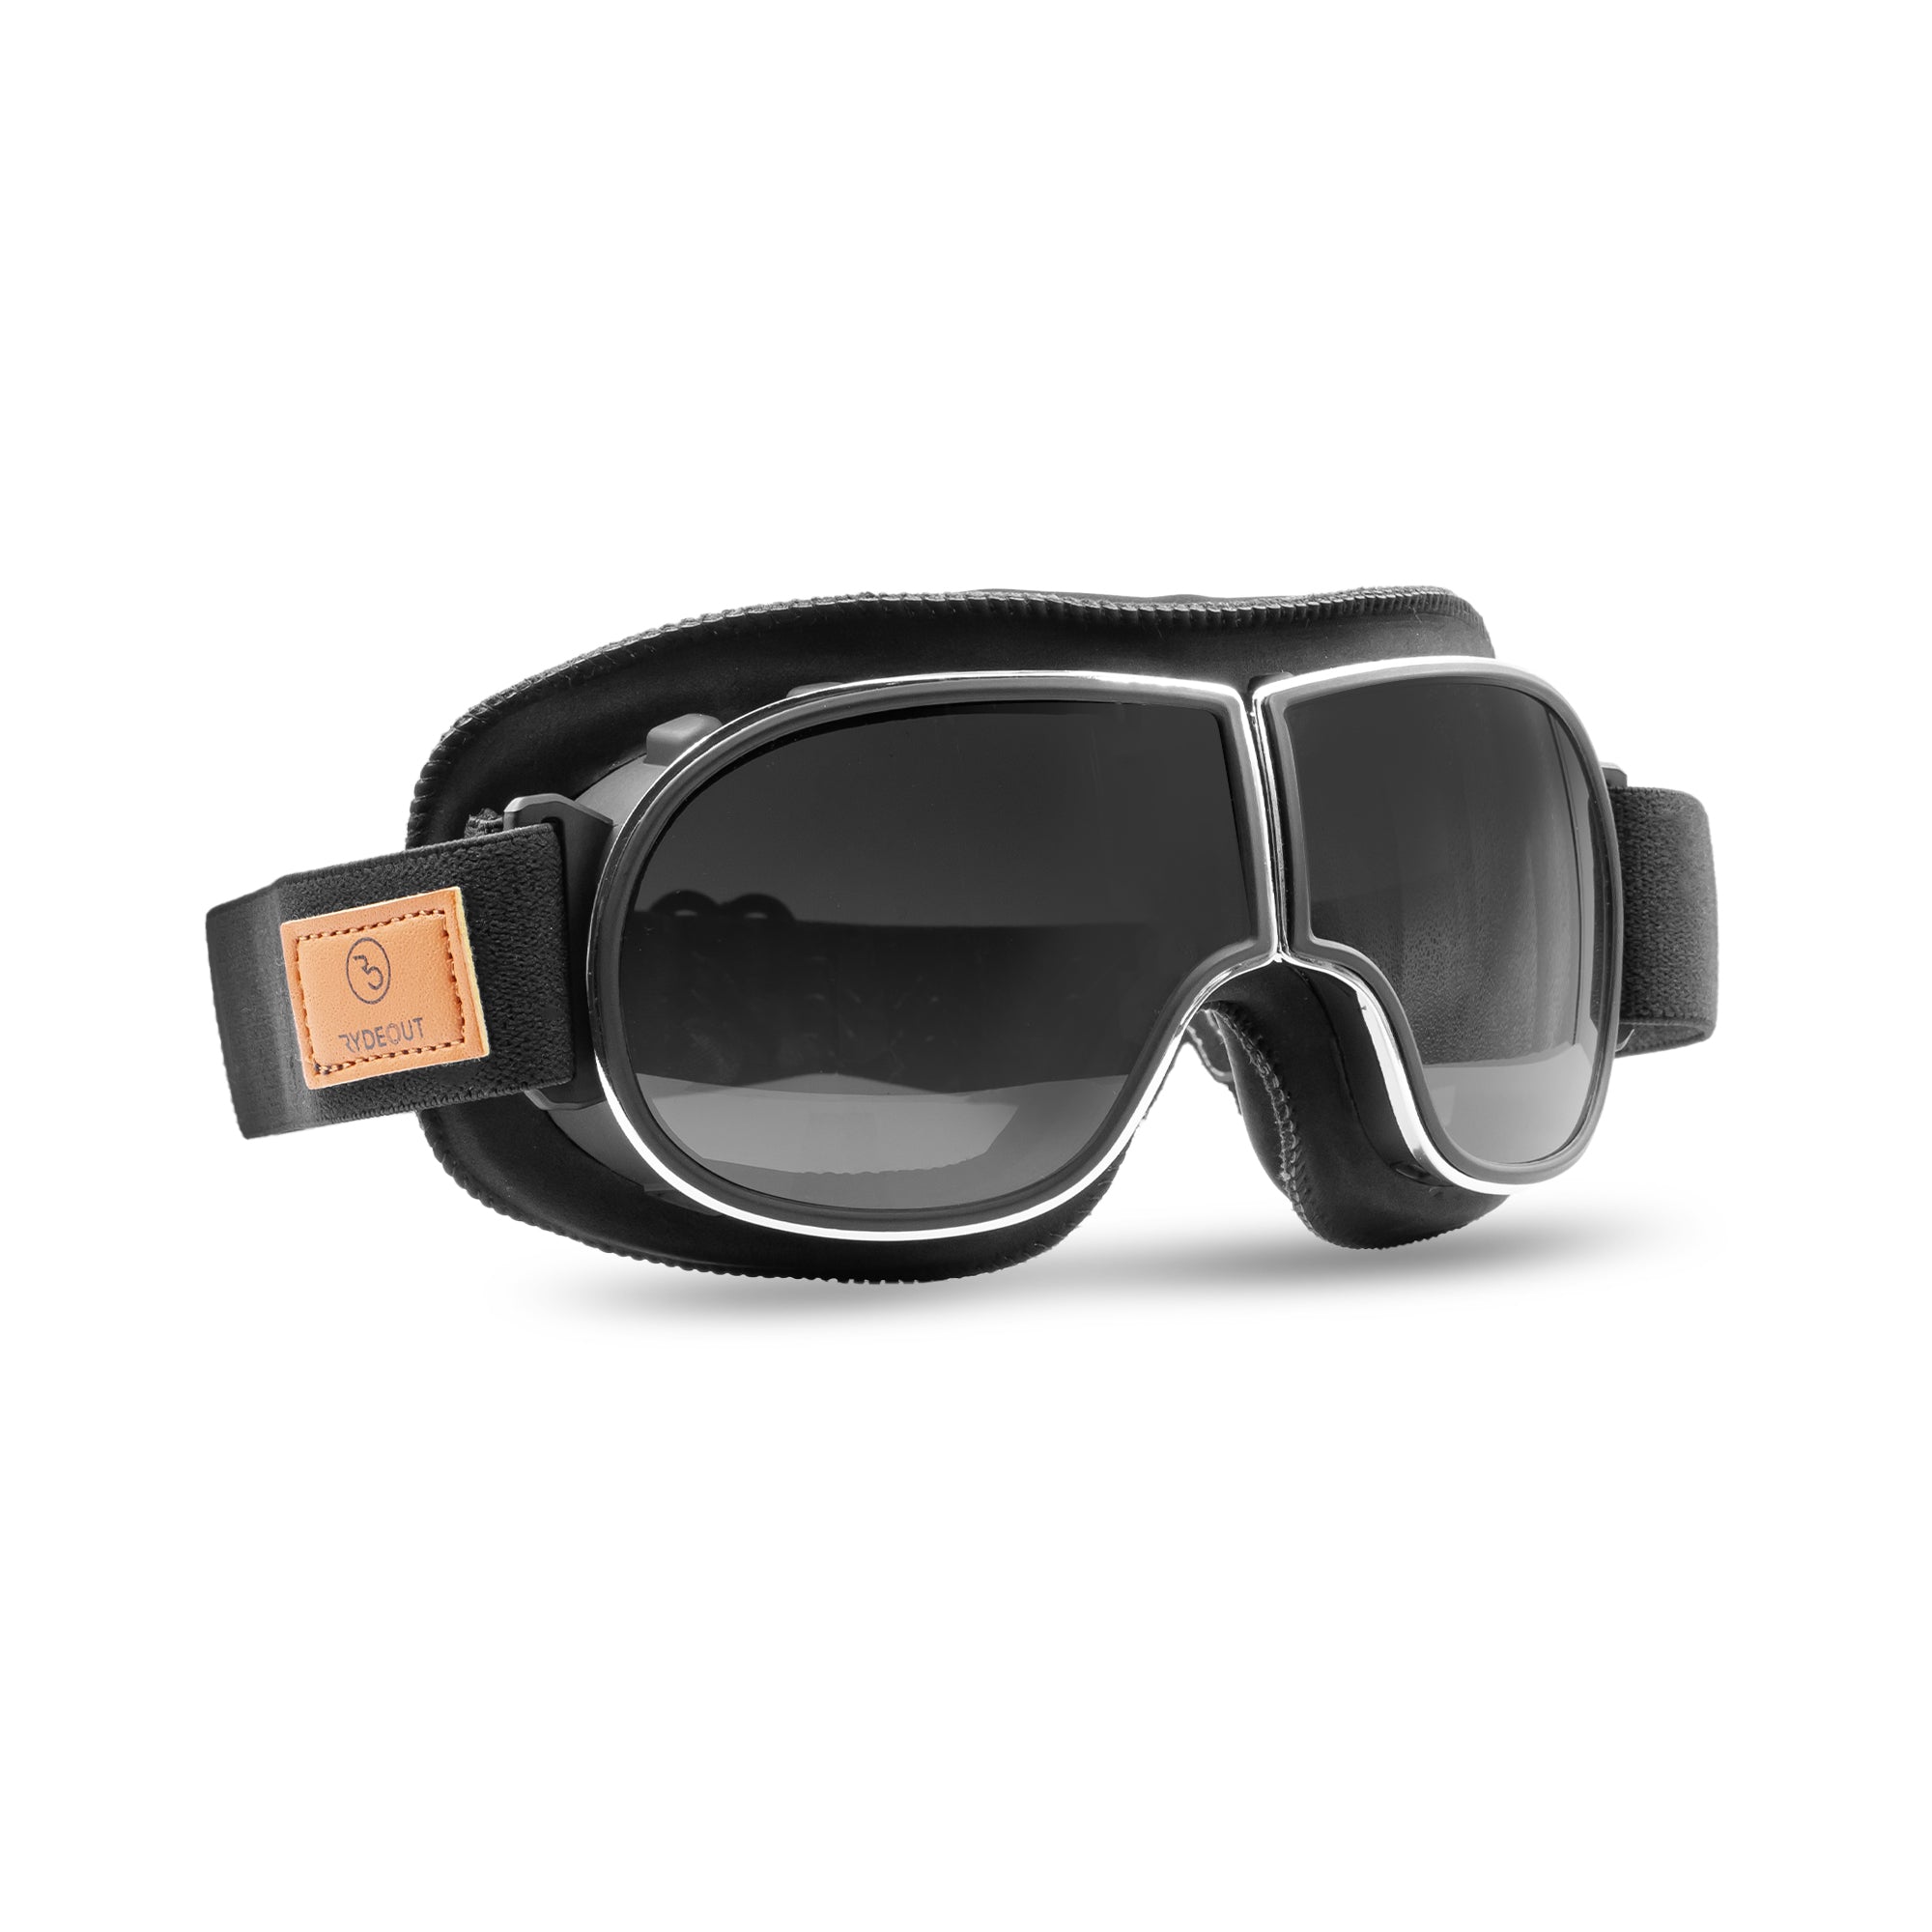 Rydeout Retro 305 Goggles –  Smoke Lens